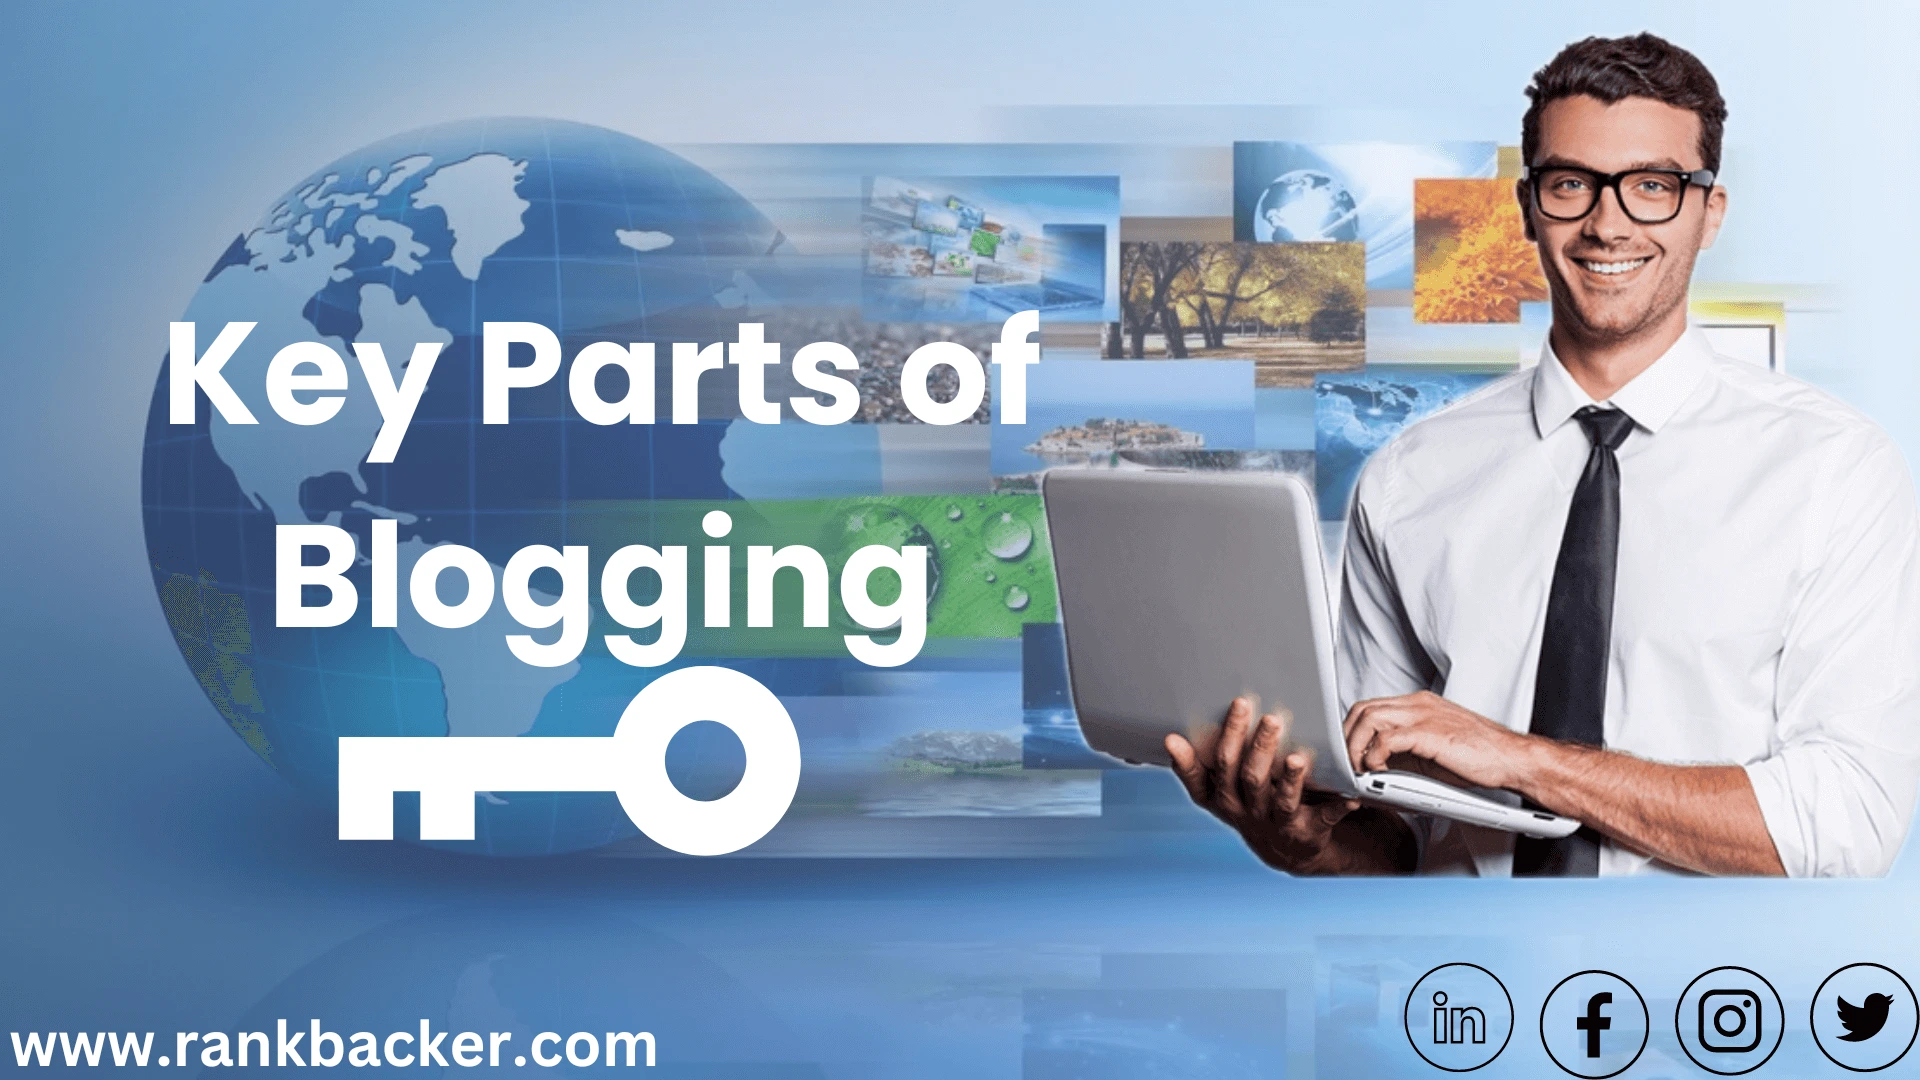 Key parts of blogging